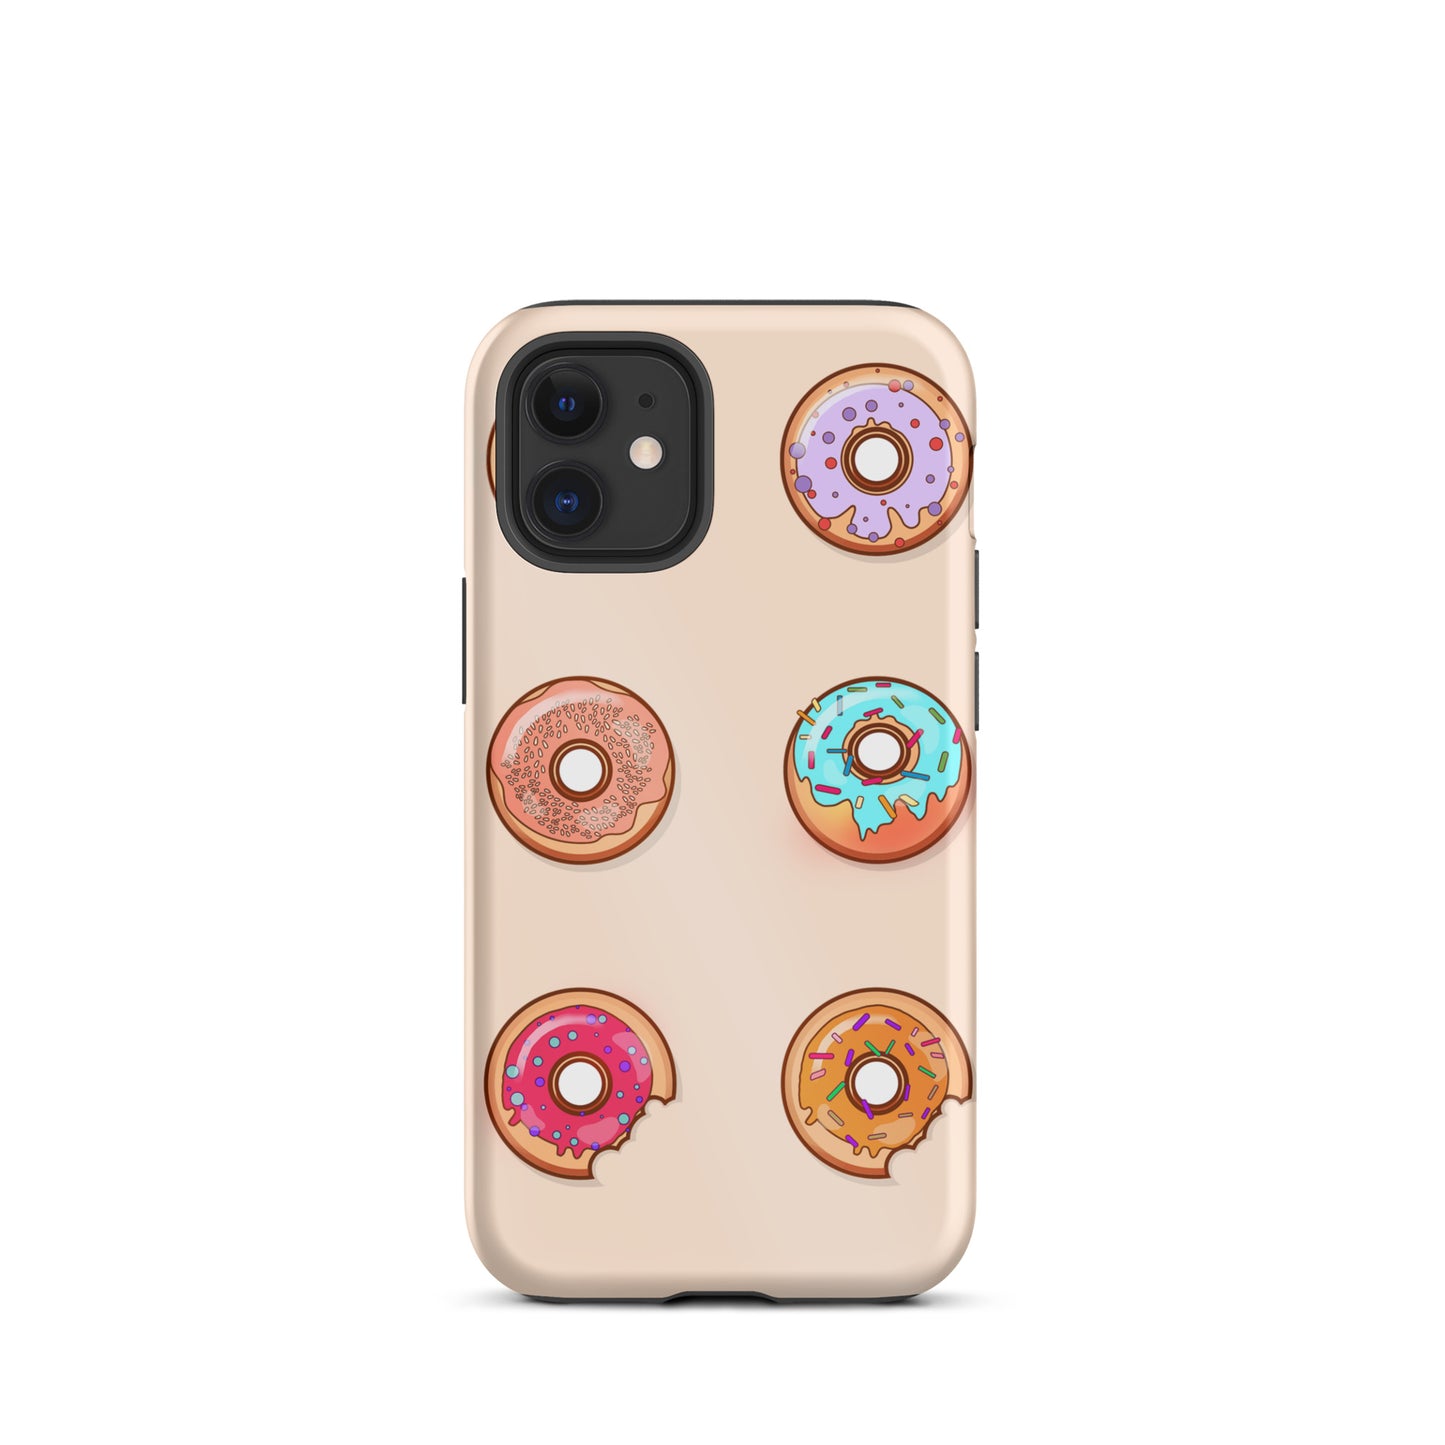 Donut iPhone case